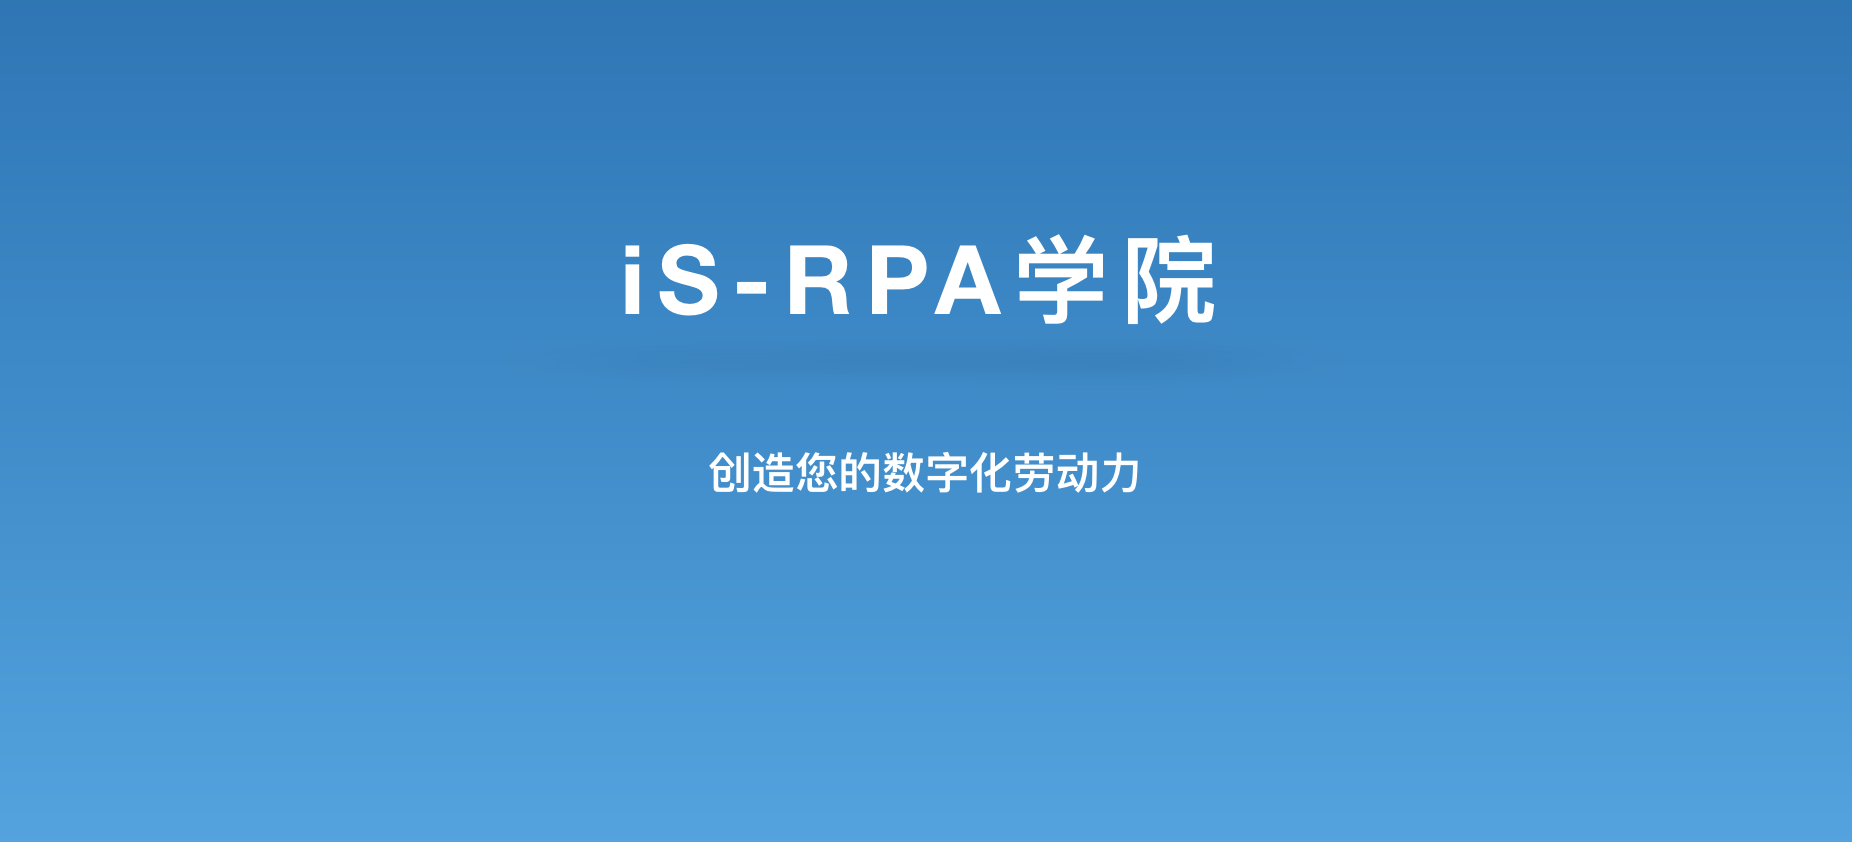 iS-RPA 学院 3 月第 4 周（03/18-03/22）培训安排